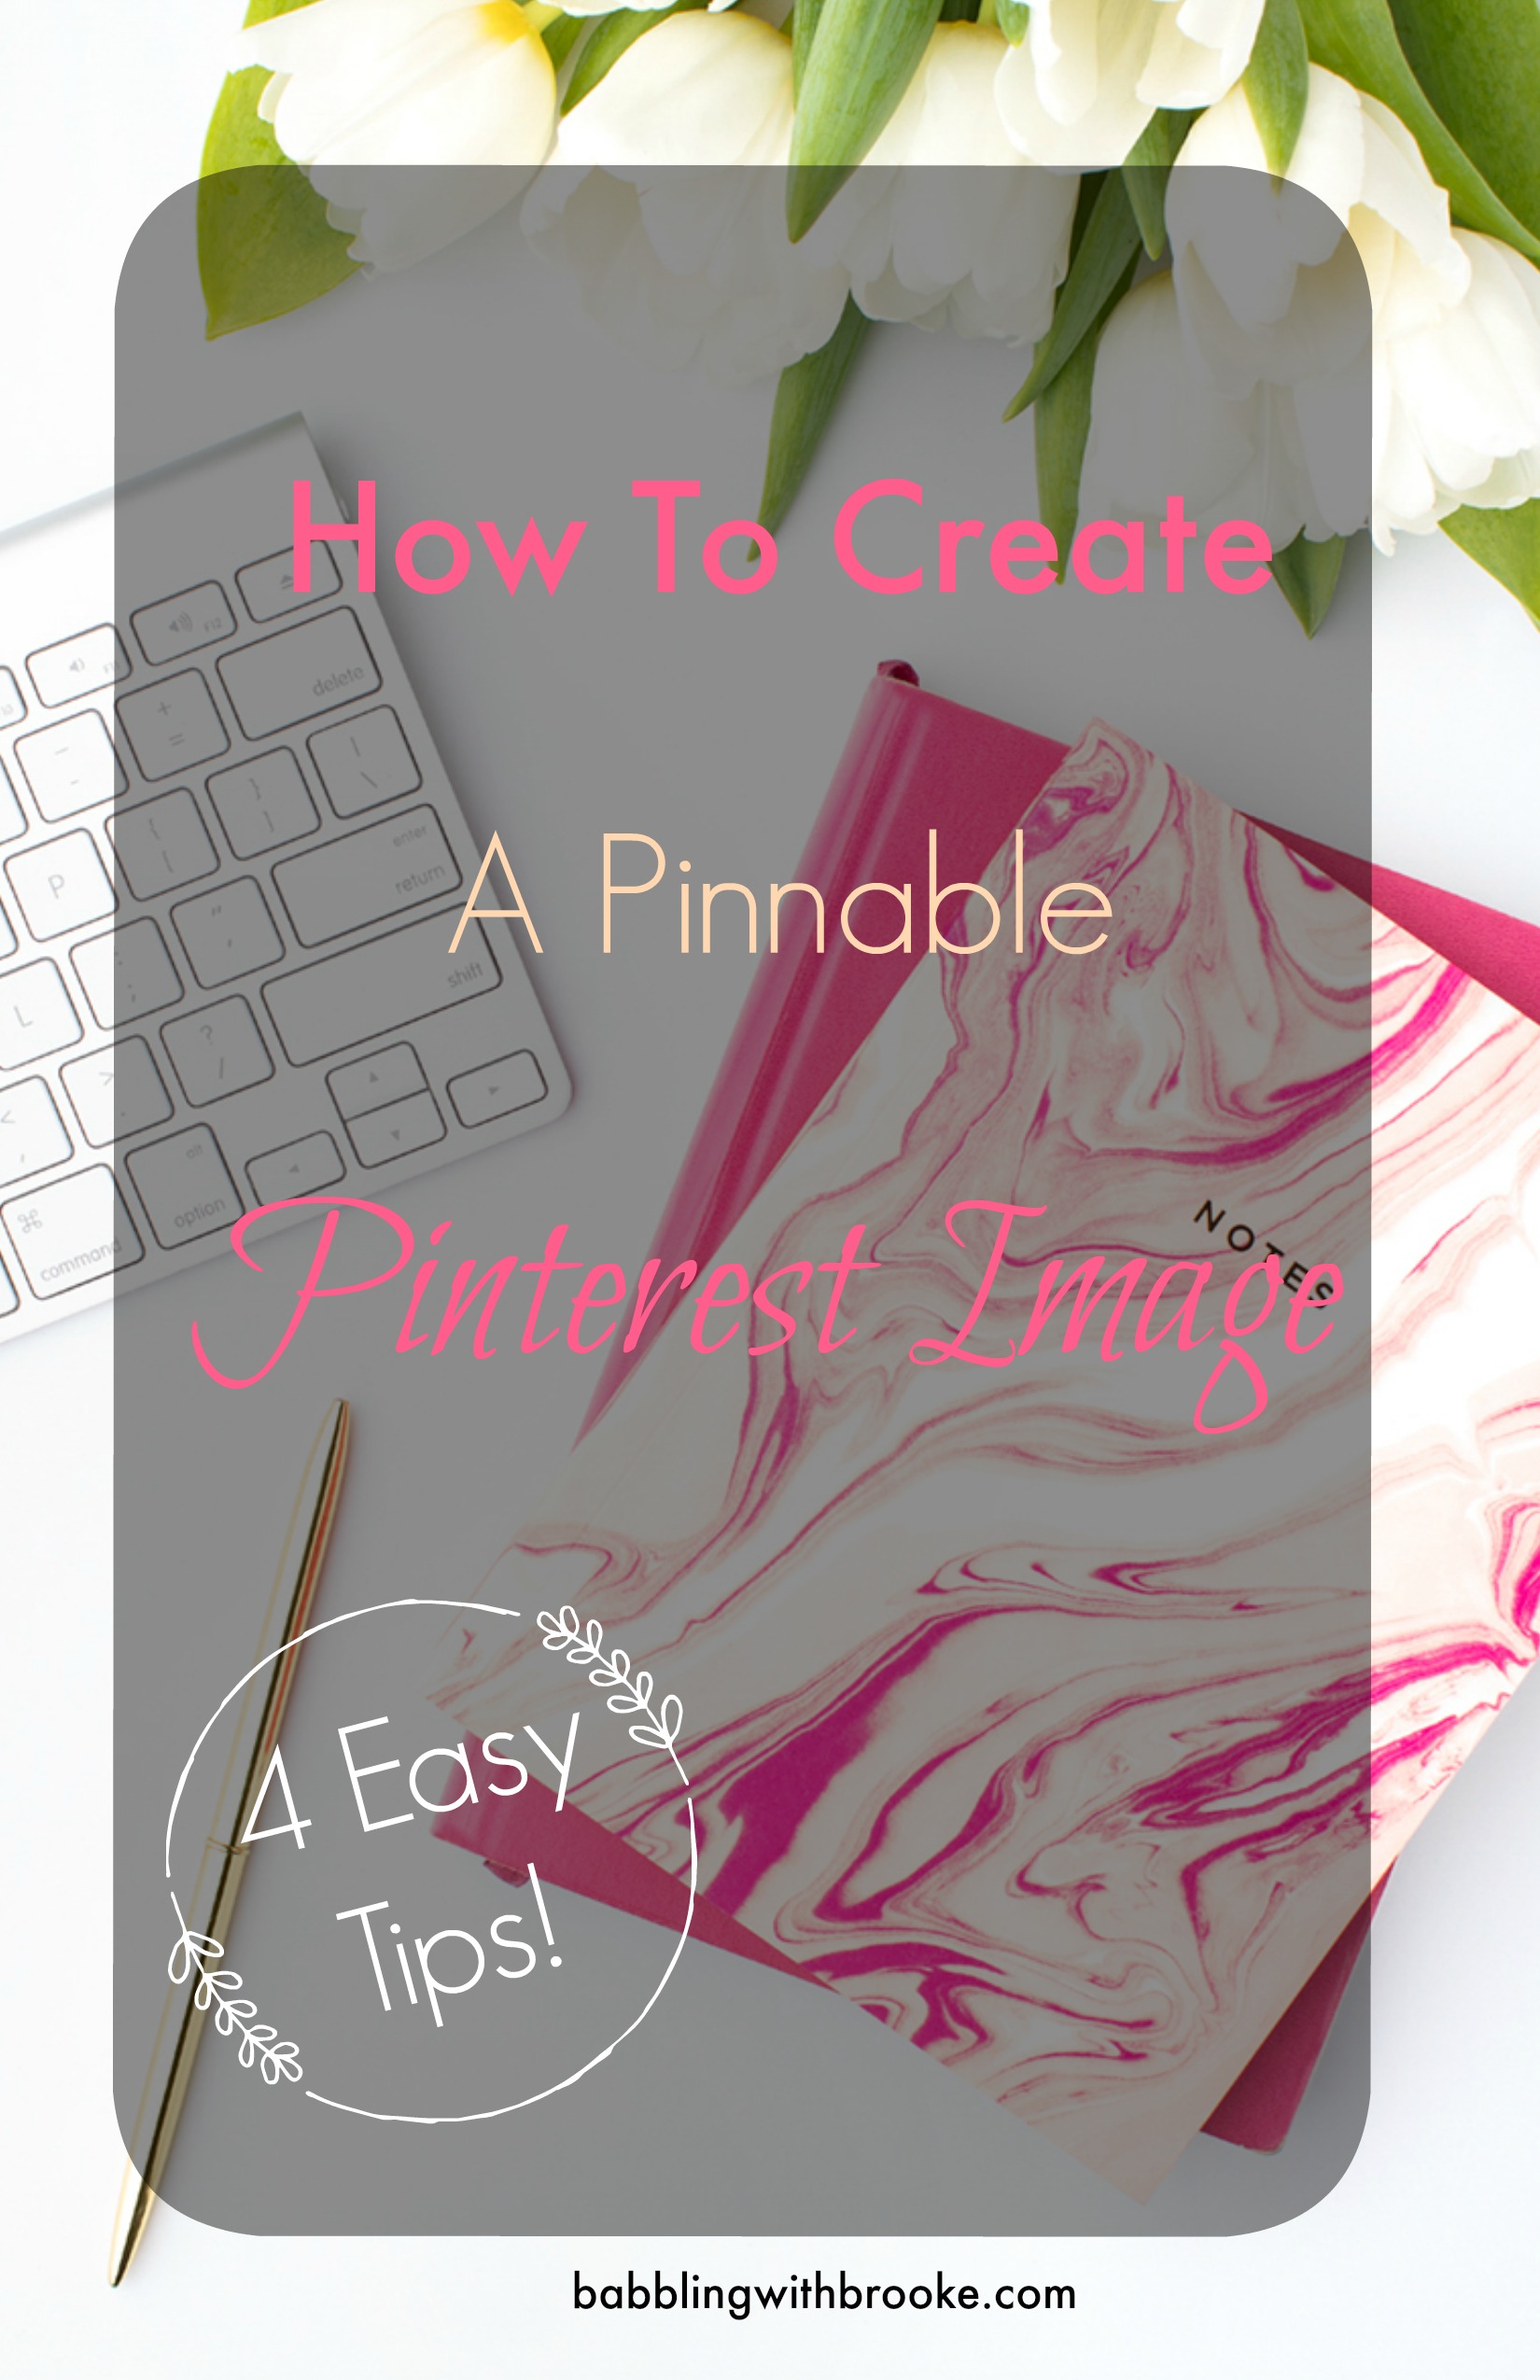 4 Easy Tips to improving your Pinterest strategies and improving you Pinterest profile! #pinteresttips #socialmediamarketing #howto #blogger 